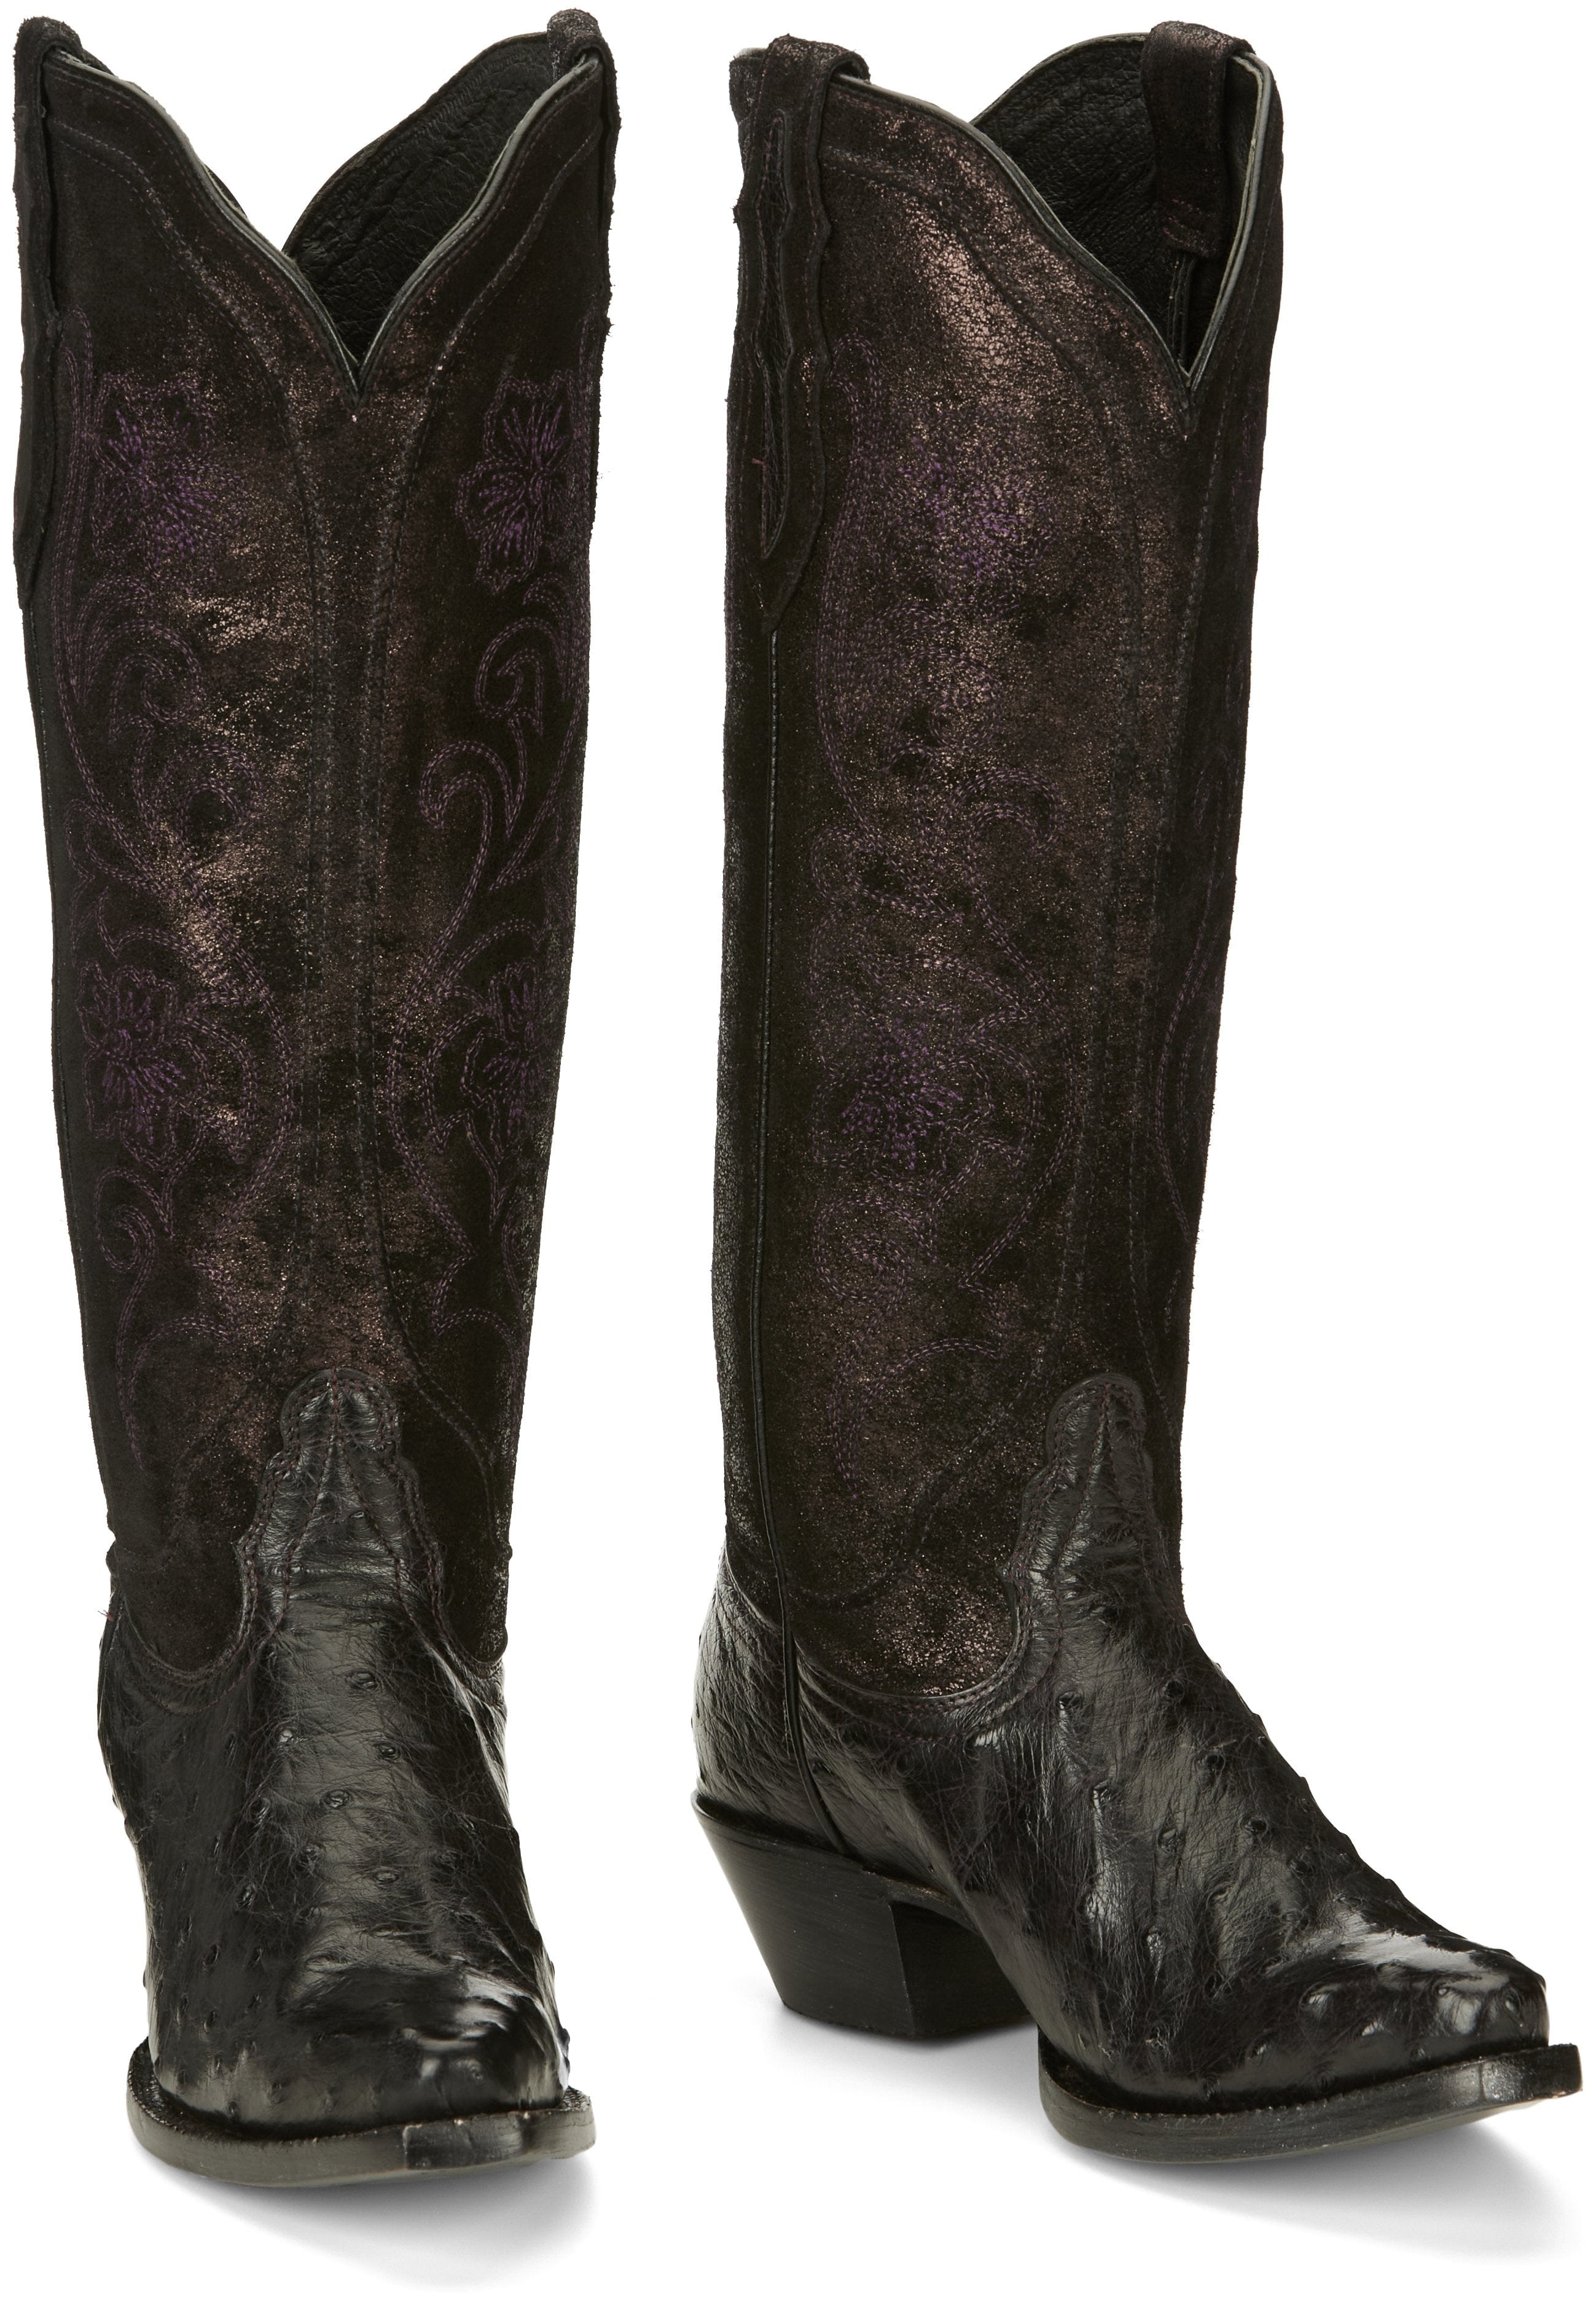 Tony Lama Boots Women's 8B Black/Turquoise $219.99 Boot Barn